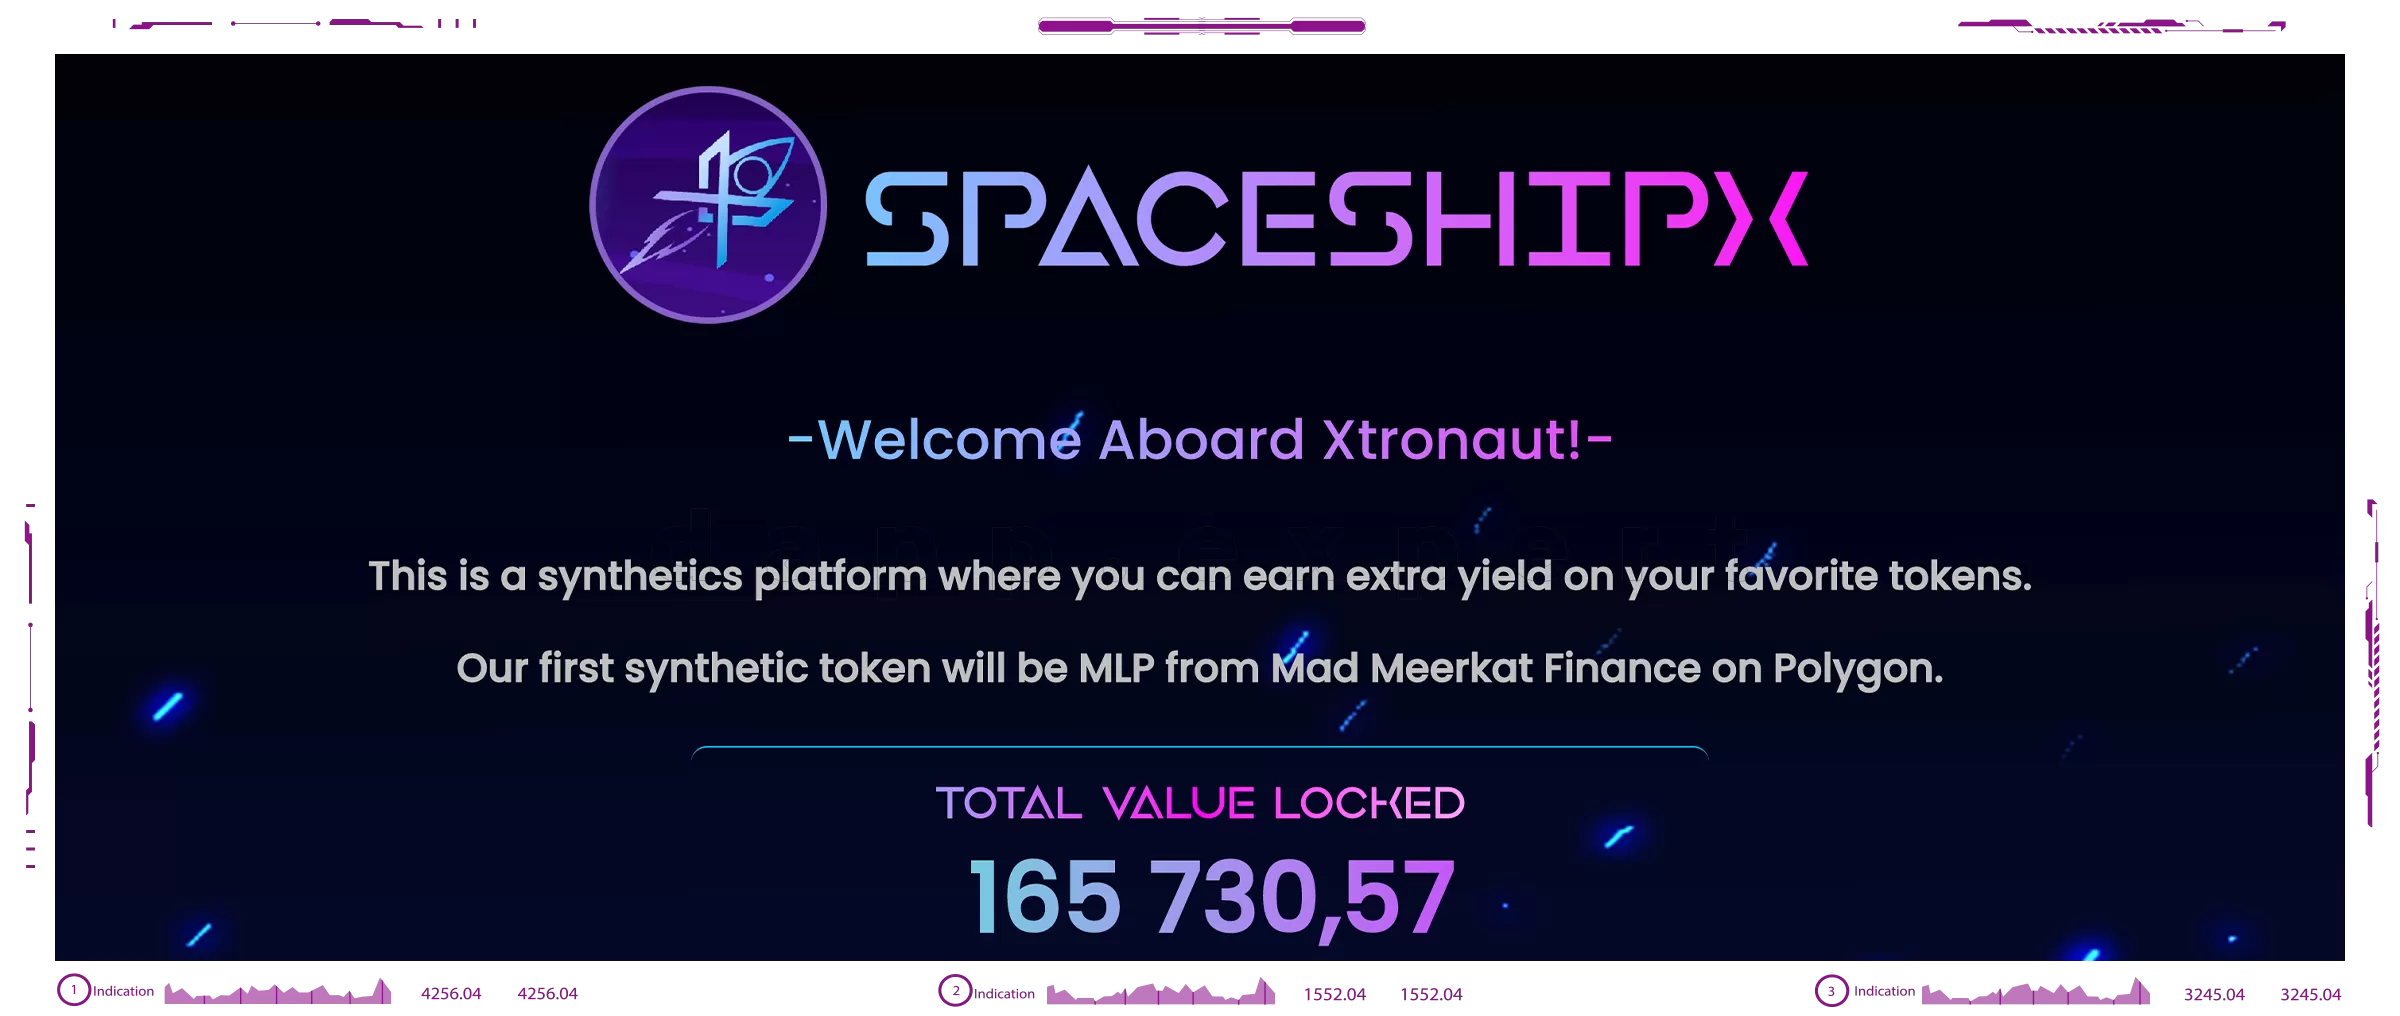 Dapp SpaceShipX